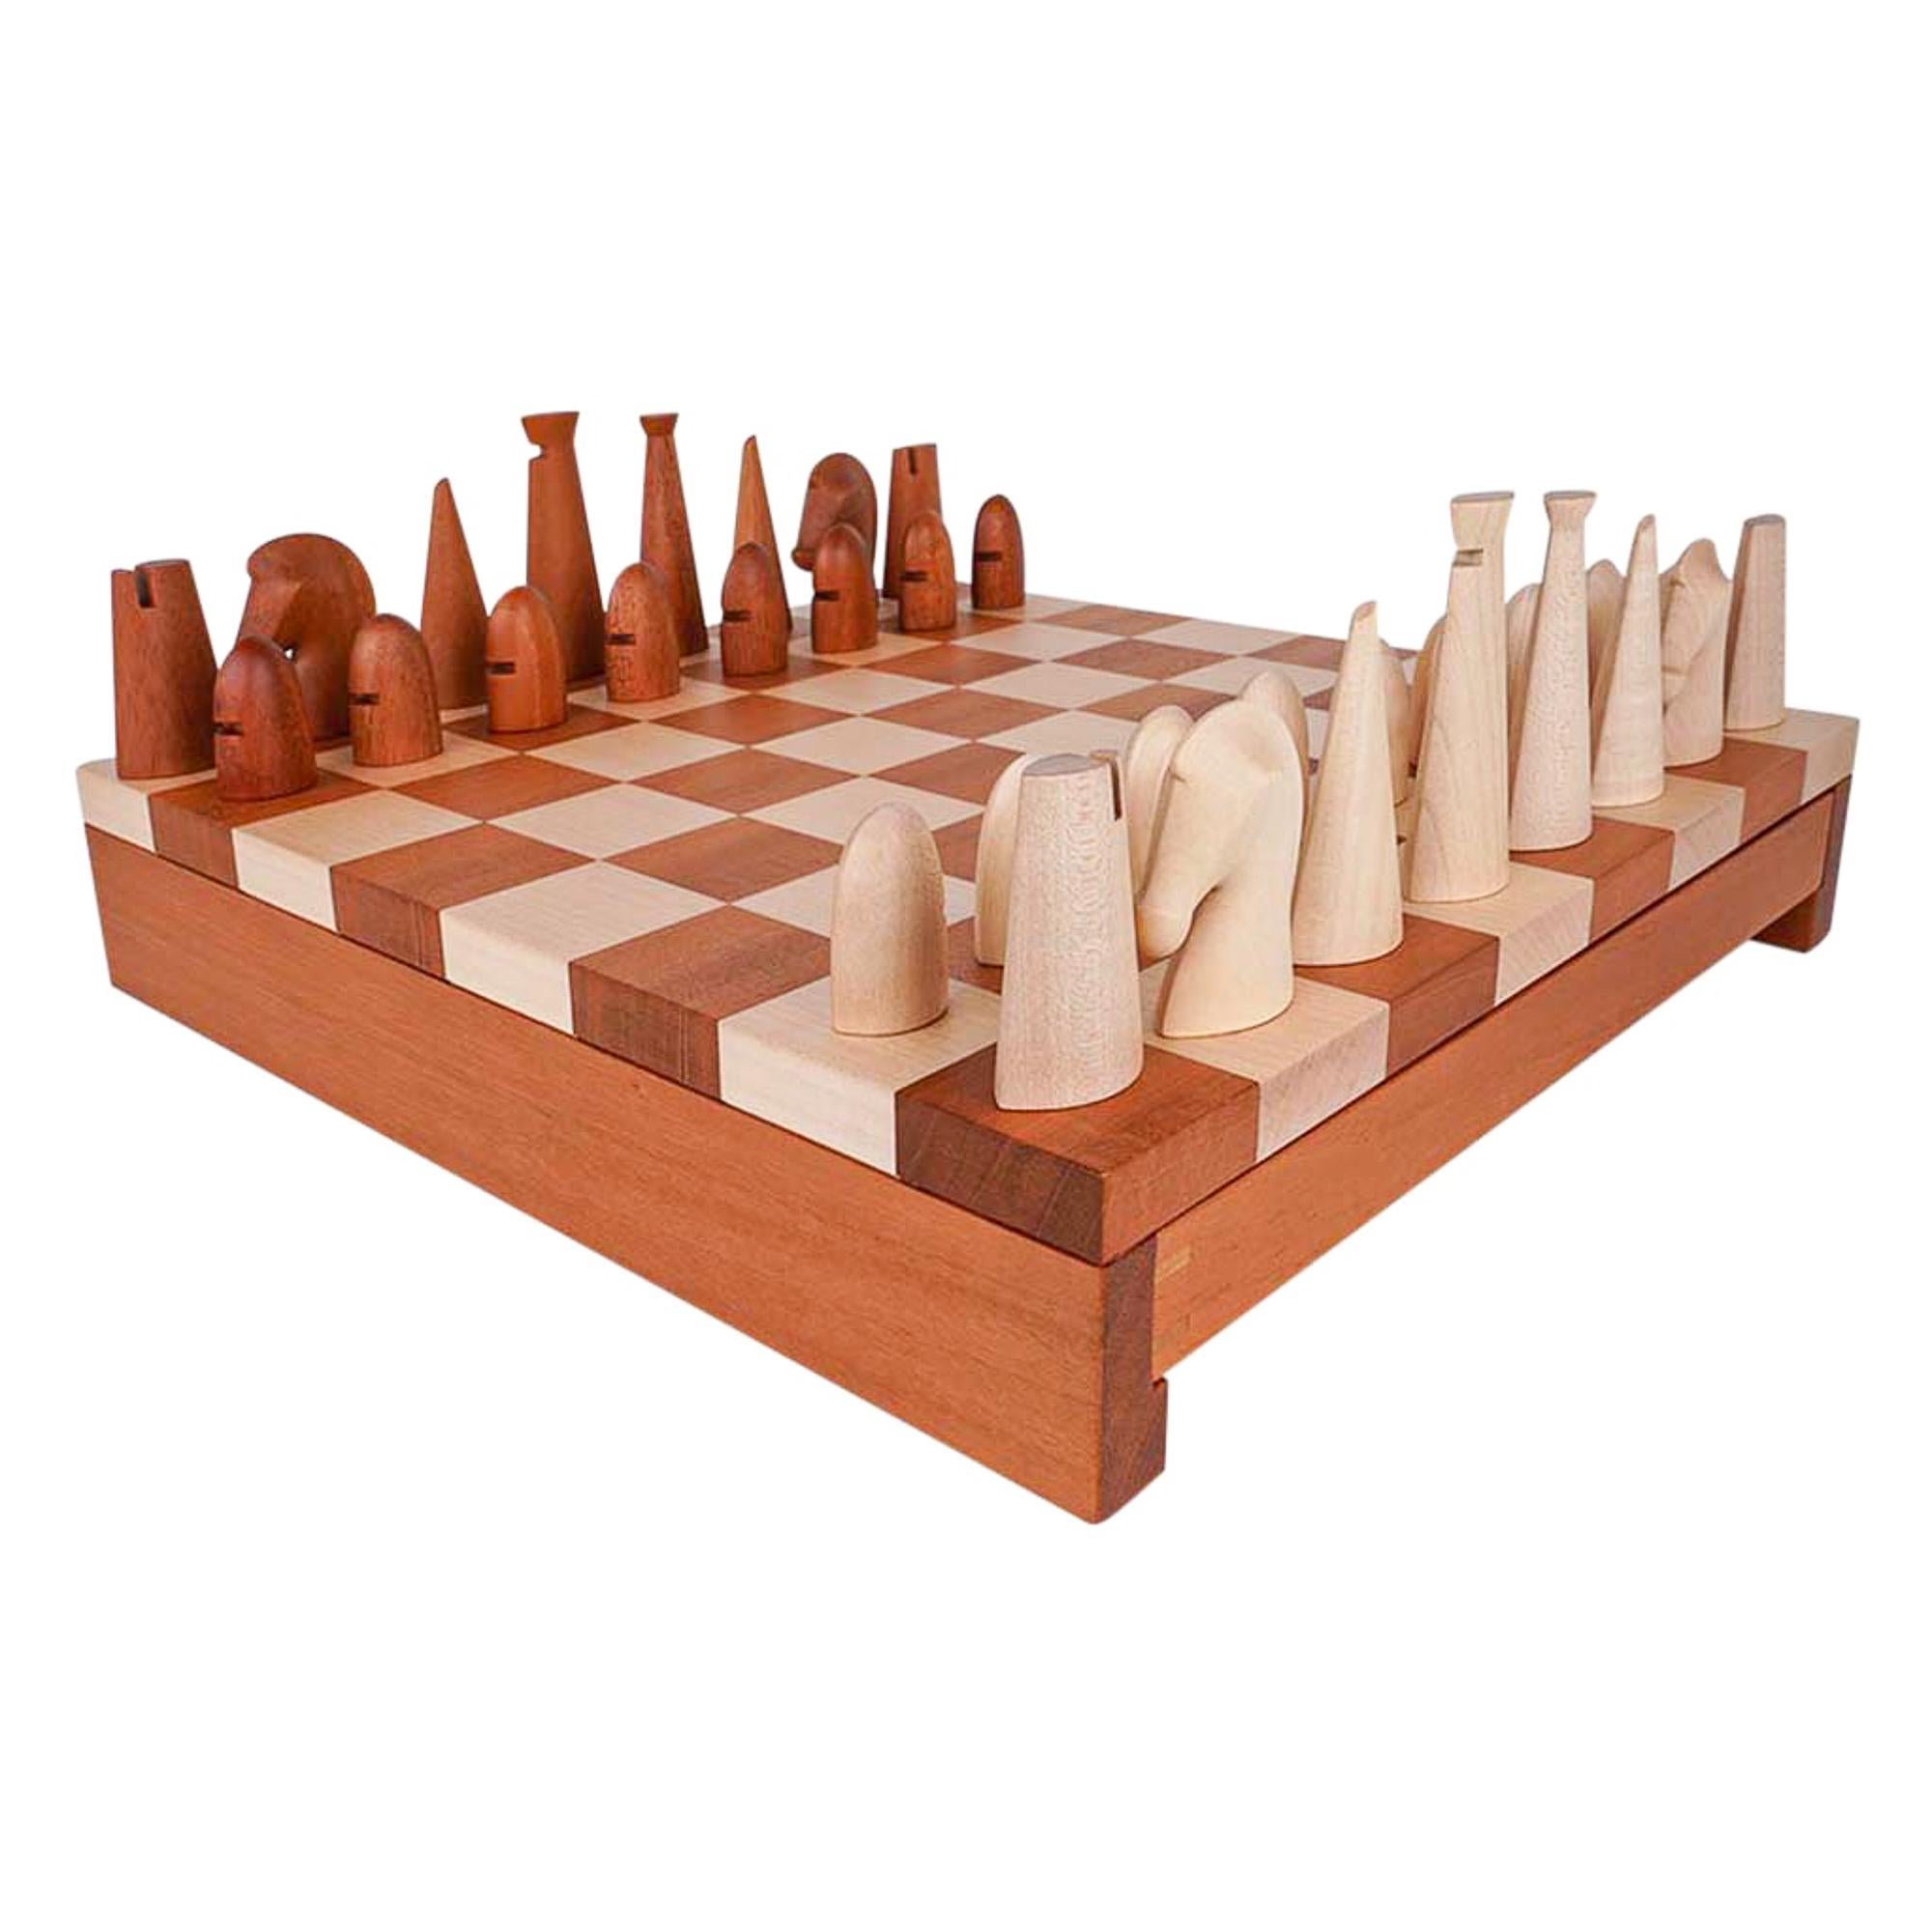 Women's or Men's Hermes Samarcande Chess Set Sycamore Mahogany Lambskin Drawers New w/ Box